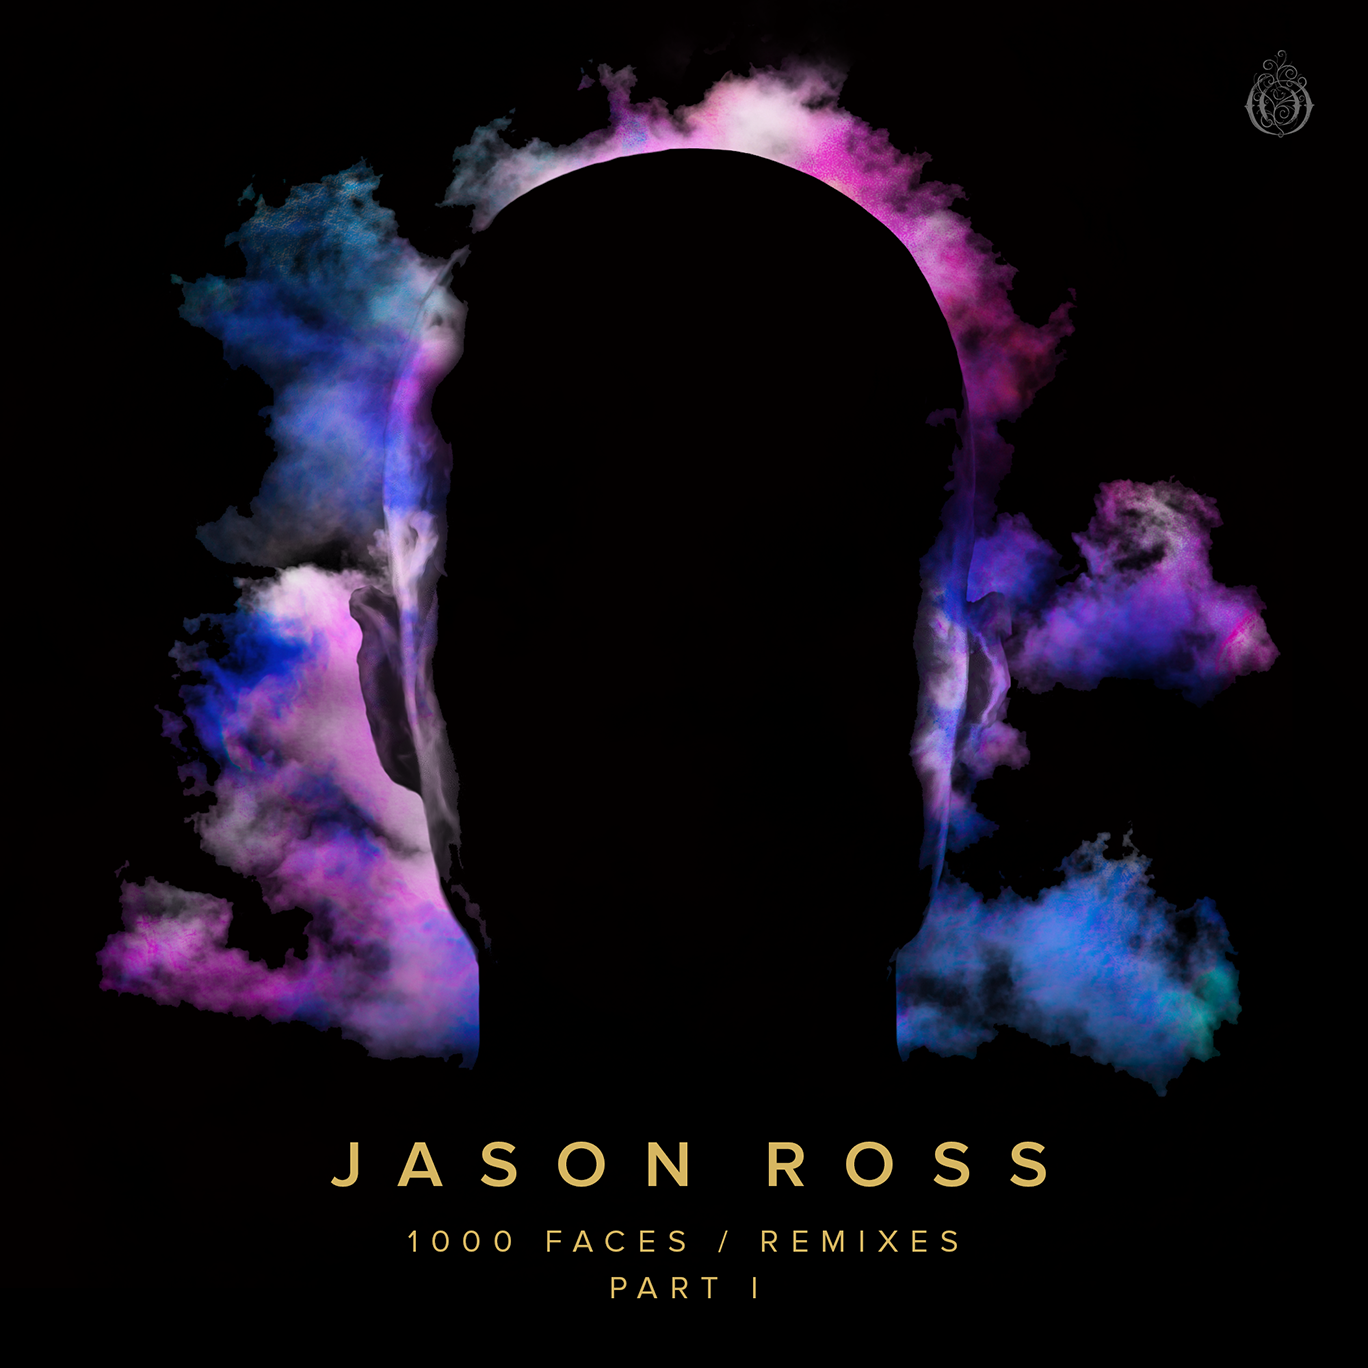 Jason Ross presents 1000 Faces (Remixes) part 1 on Ophelia Records